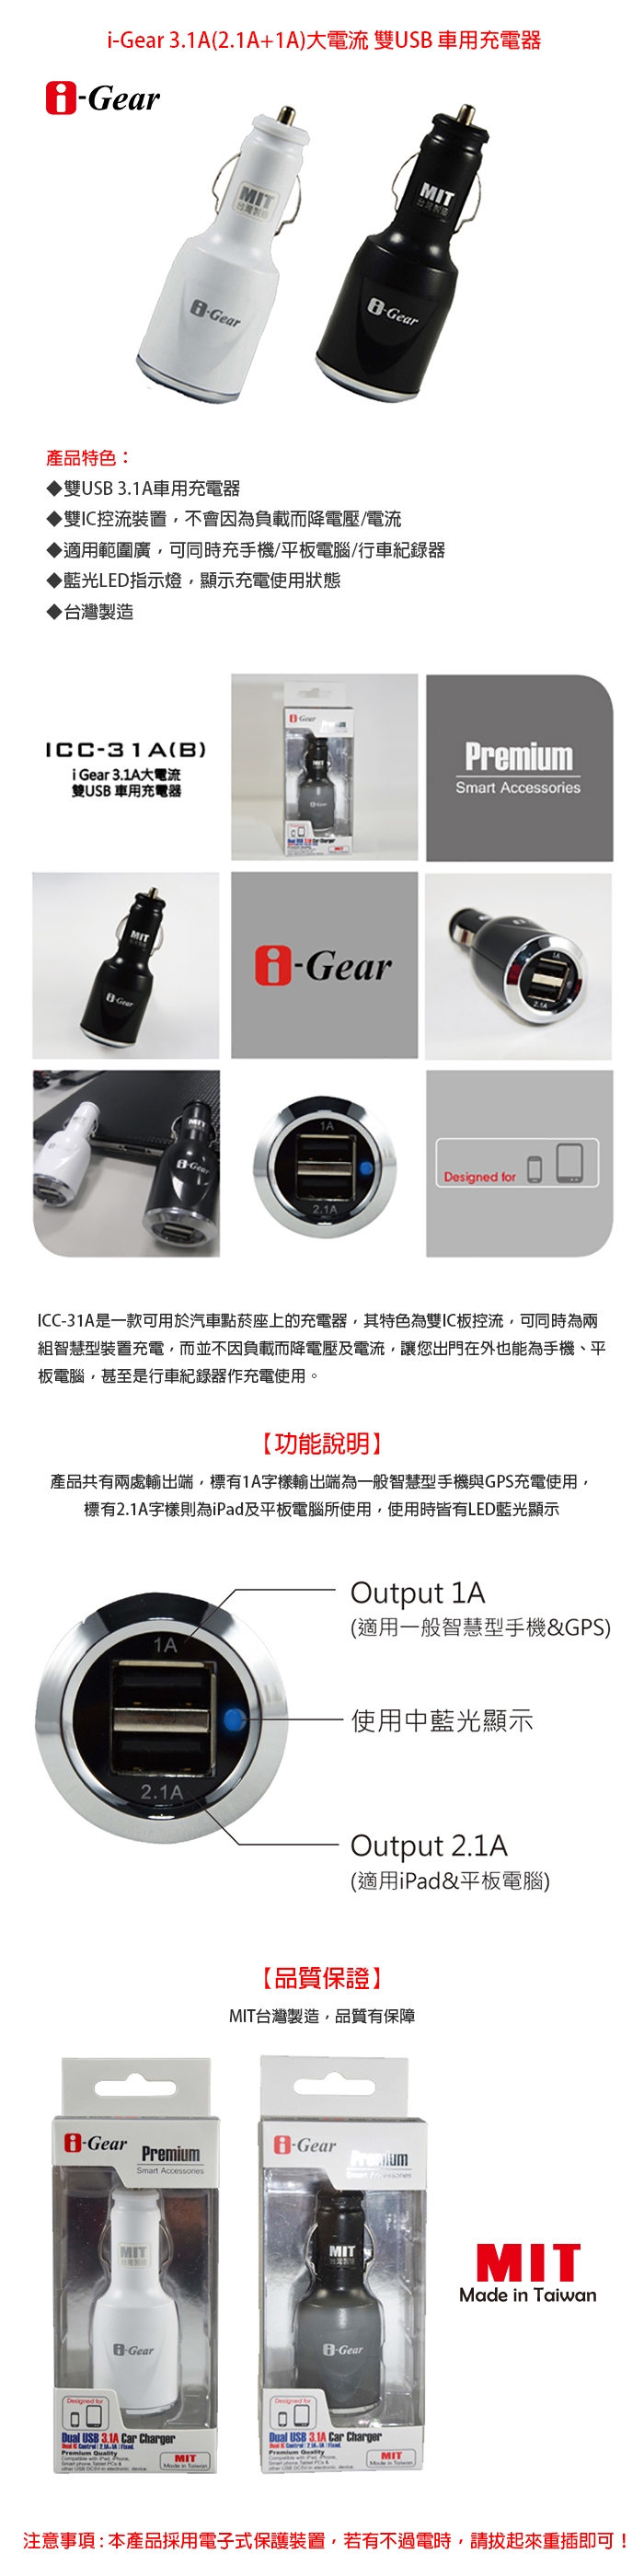 i-Gear 3.1A大電流雙USB車用充電器ICC-31A